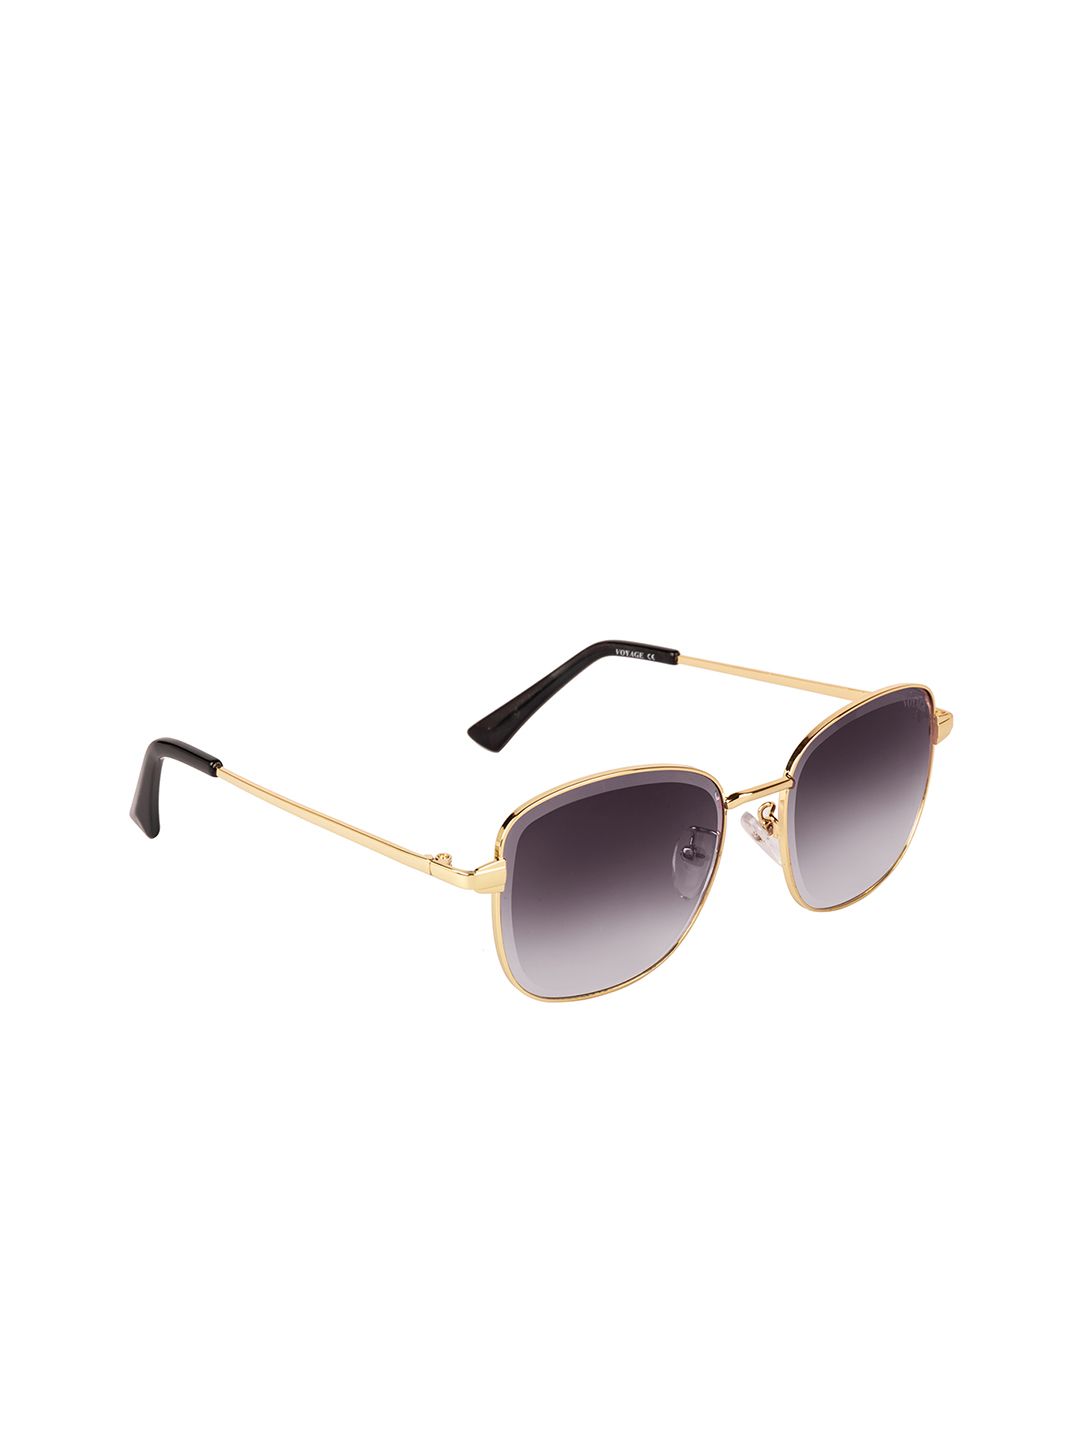 Voyage Grey Square Sunglasses B80427MG3463 Price in India